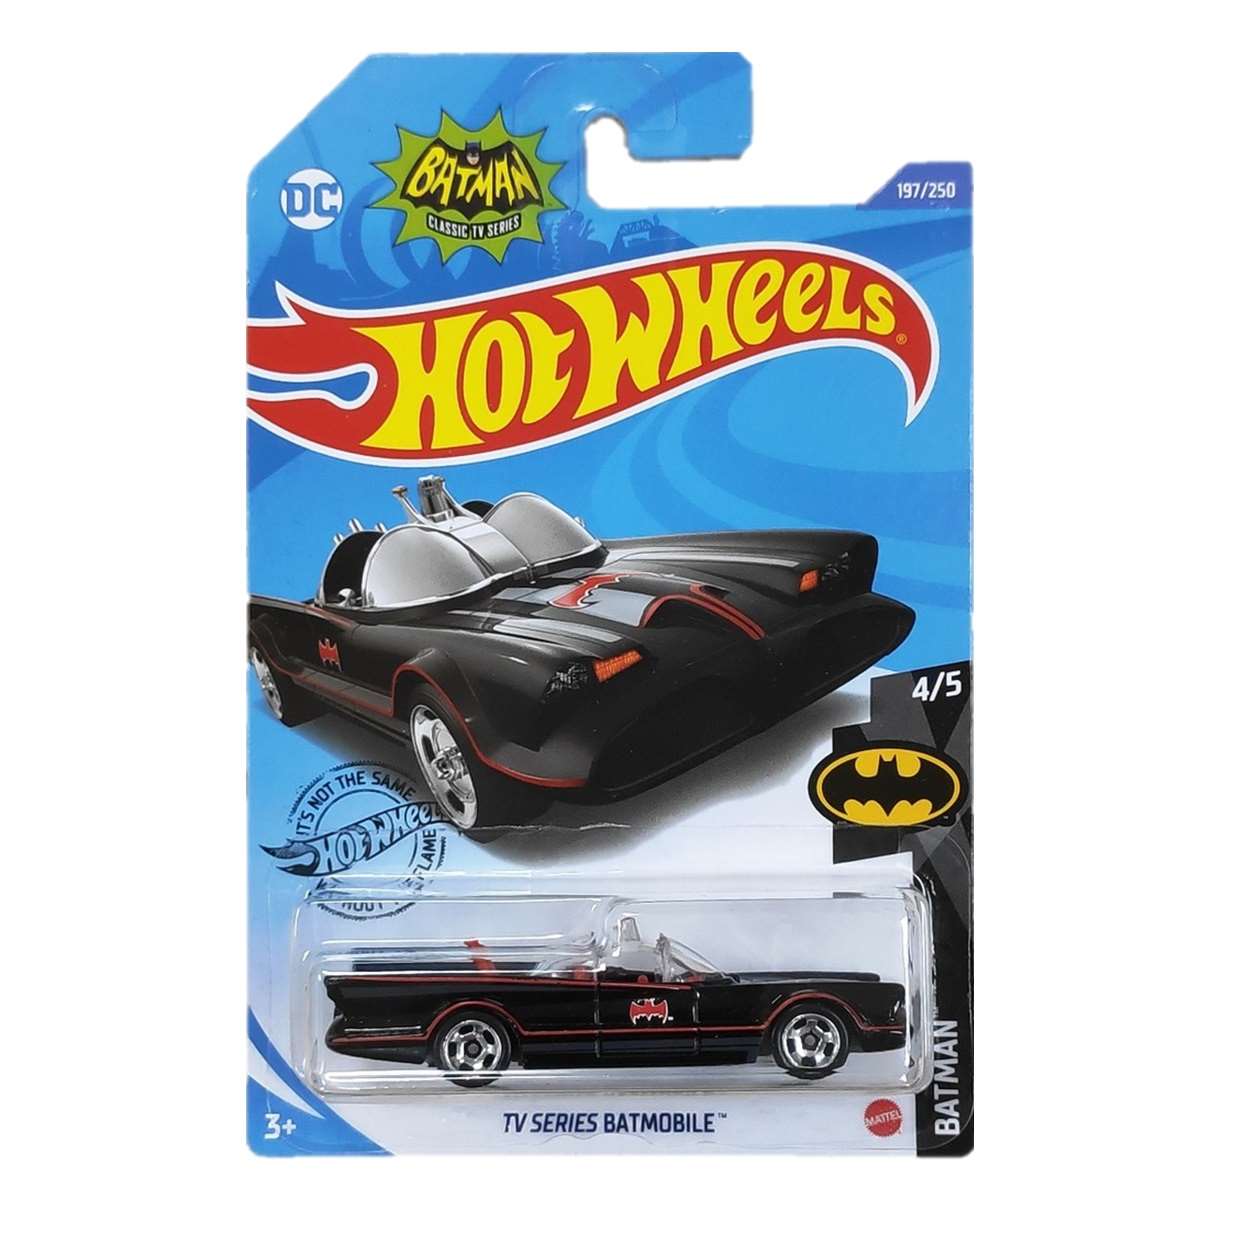 Batmobile Tv Series 4/5 Dc Comics Hot Wheels 197/250